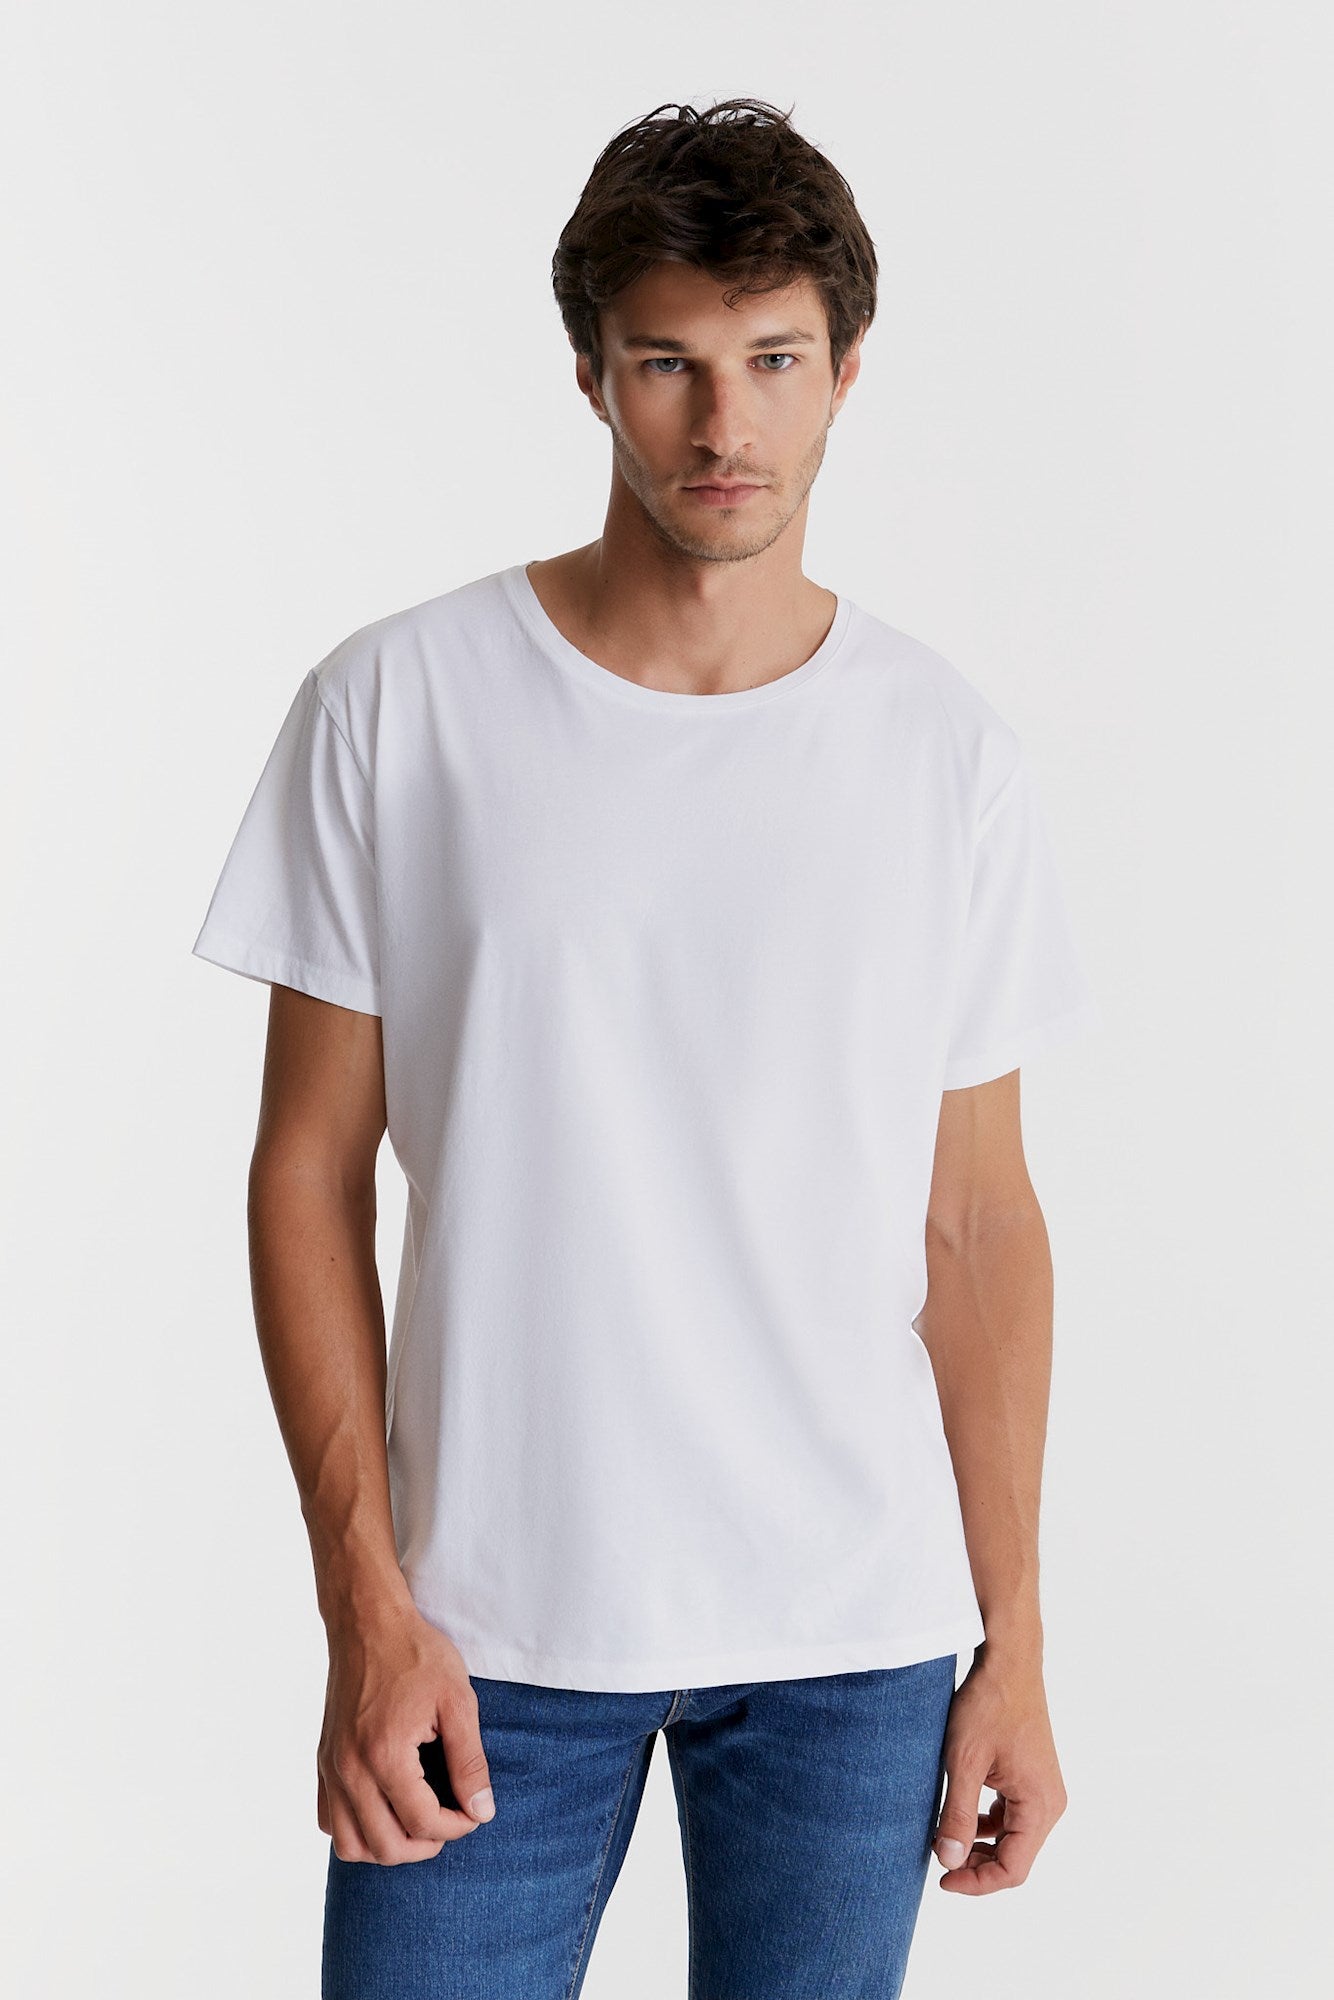 Coy - T-shirt - White